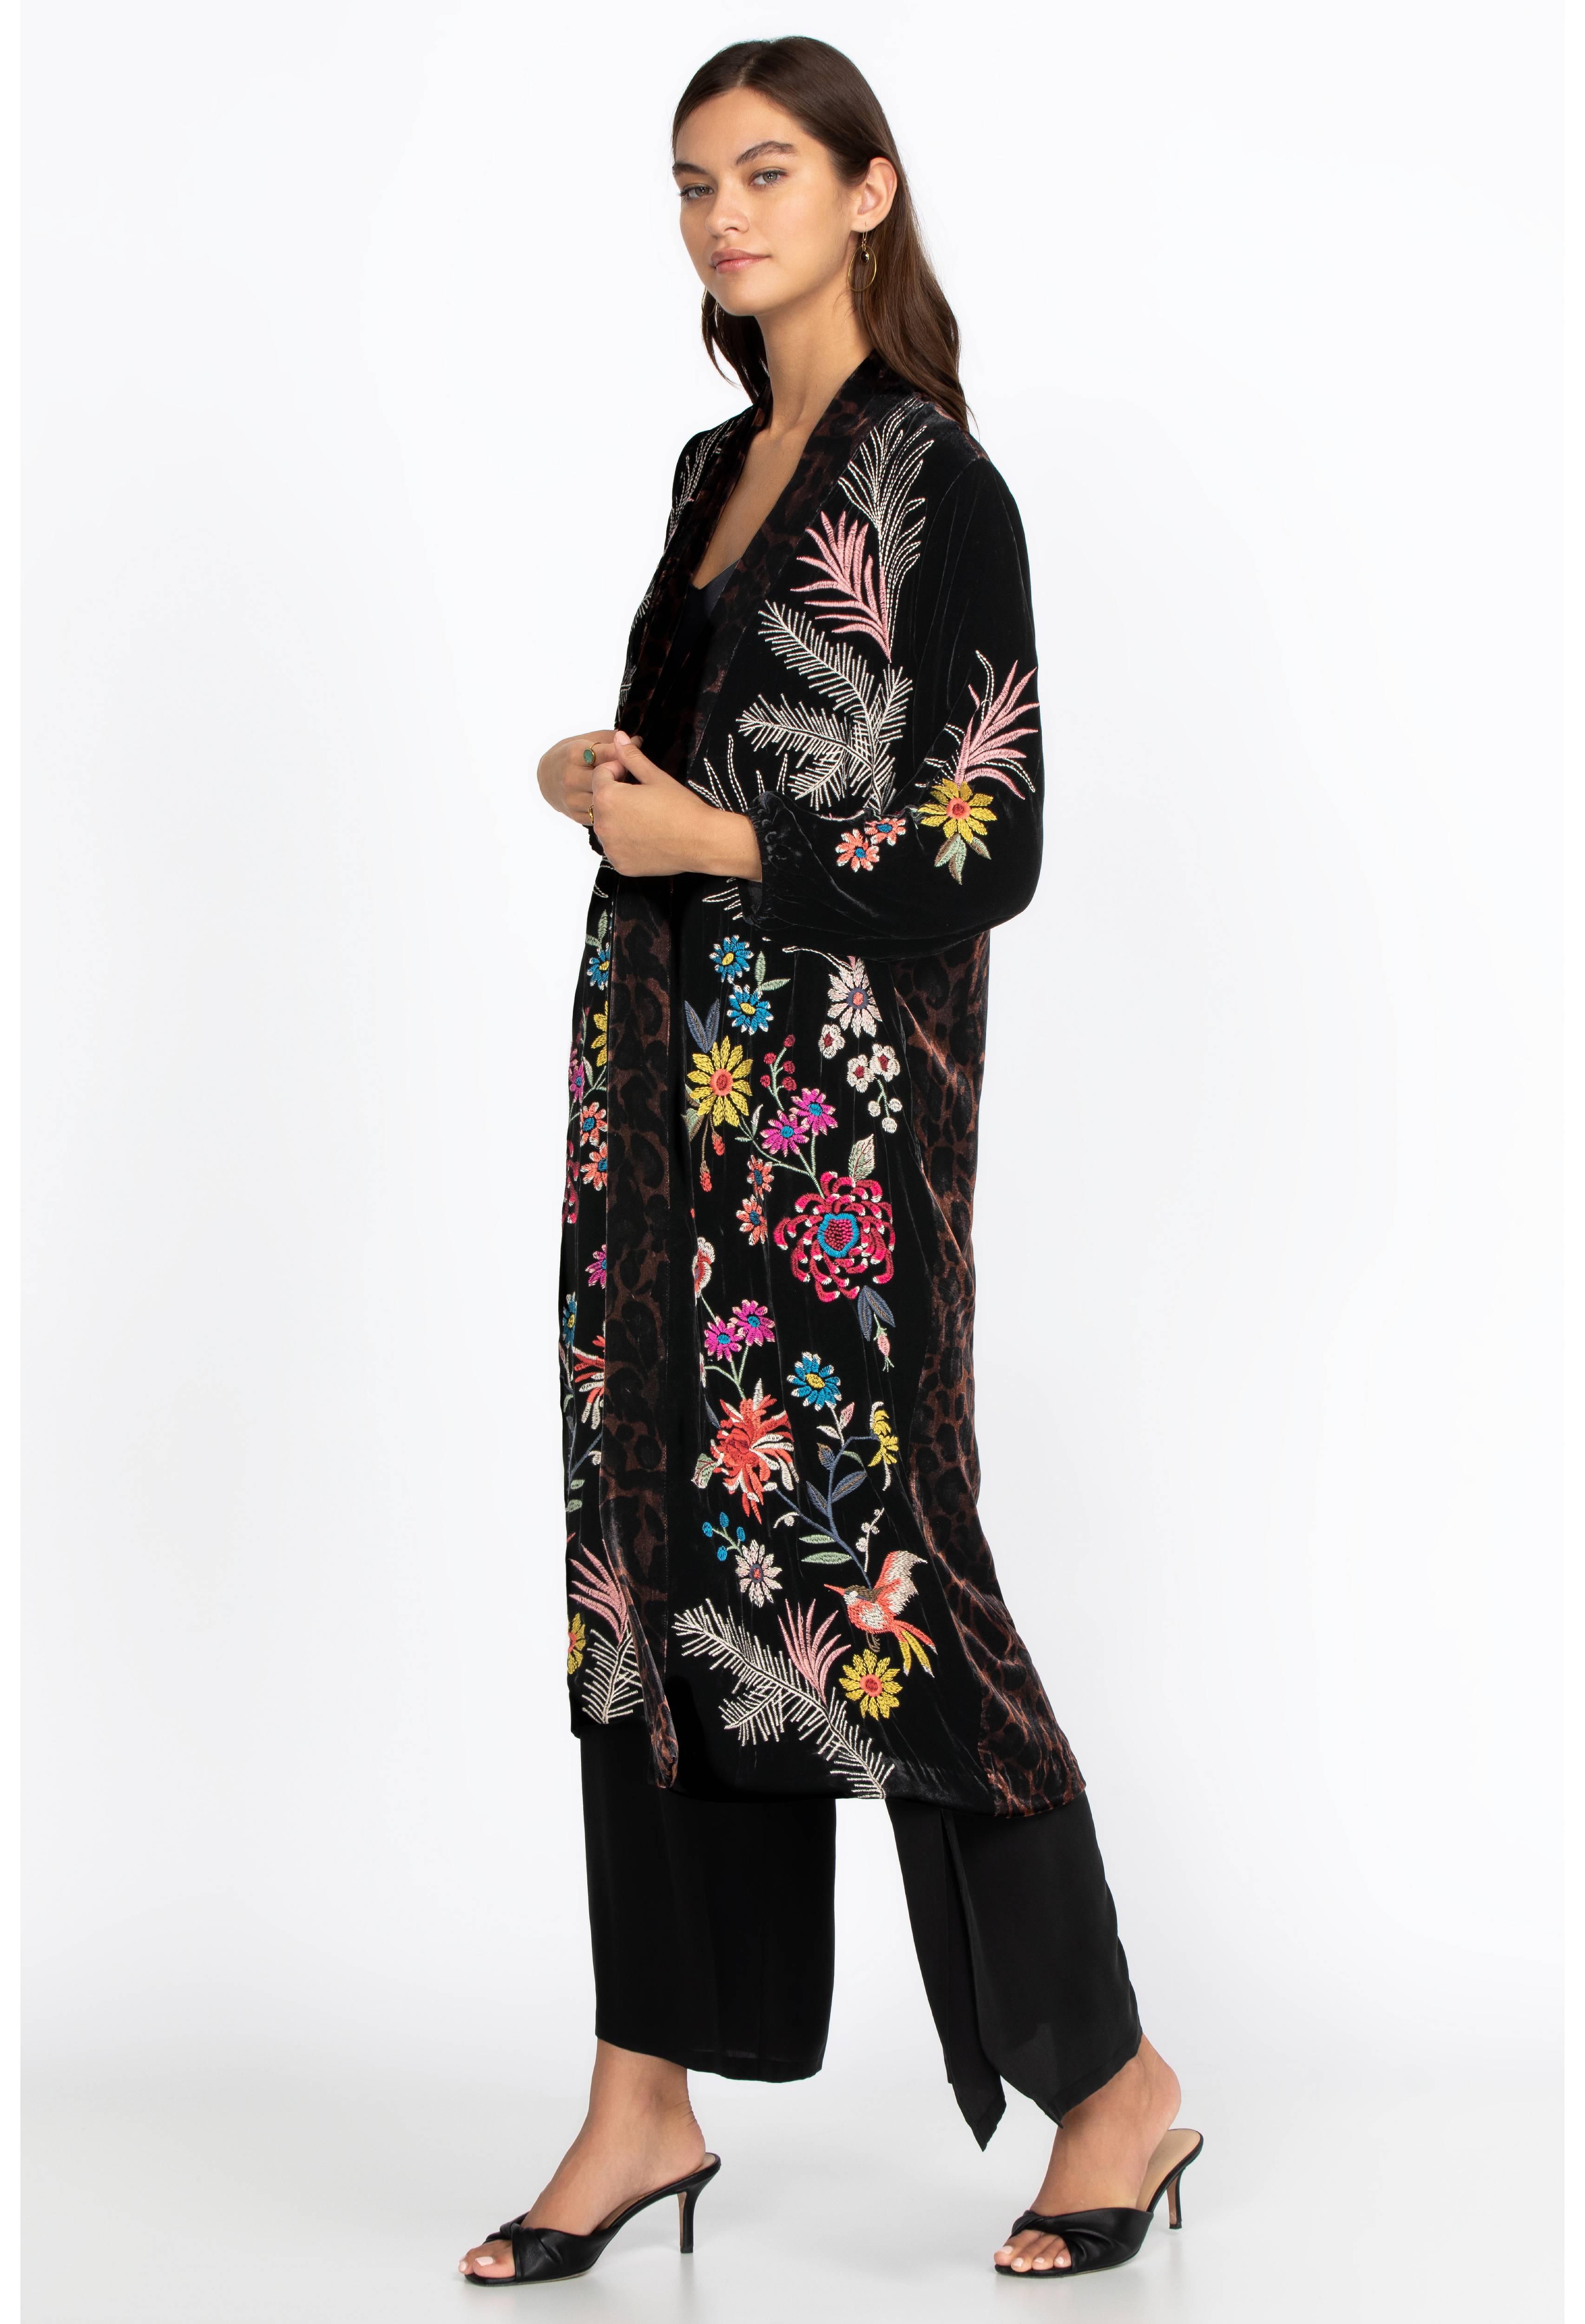 Tiarei Velvet Bishop Sleeve Kimono Coat, , large image number 1